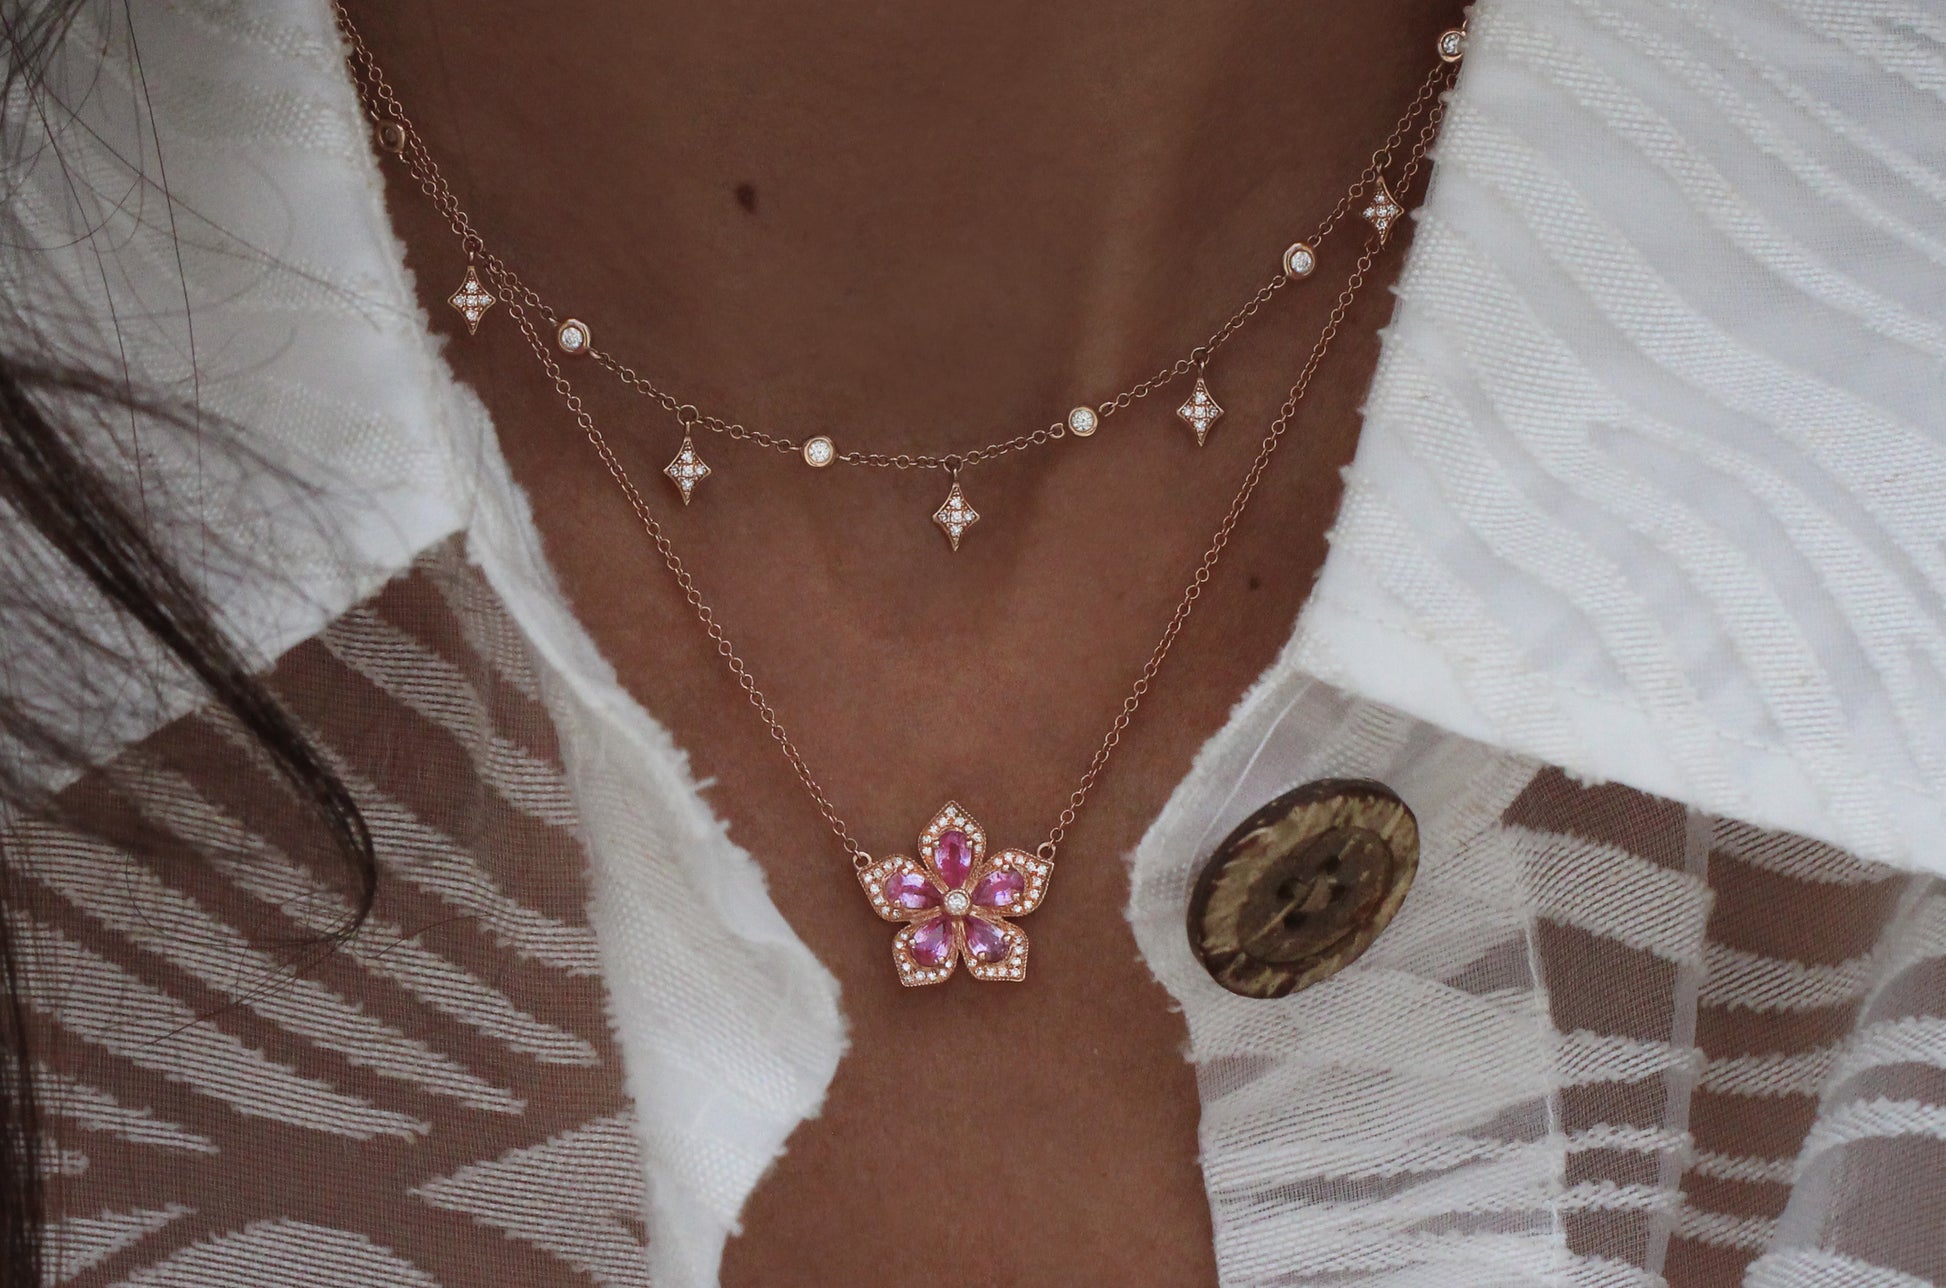 Louis Vuitton Star Blossom Ear Cuff, Pink Gold And Diamonds - Per Unit